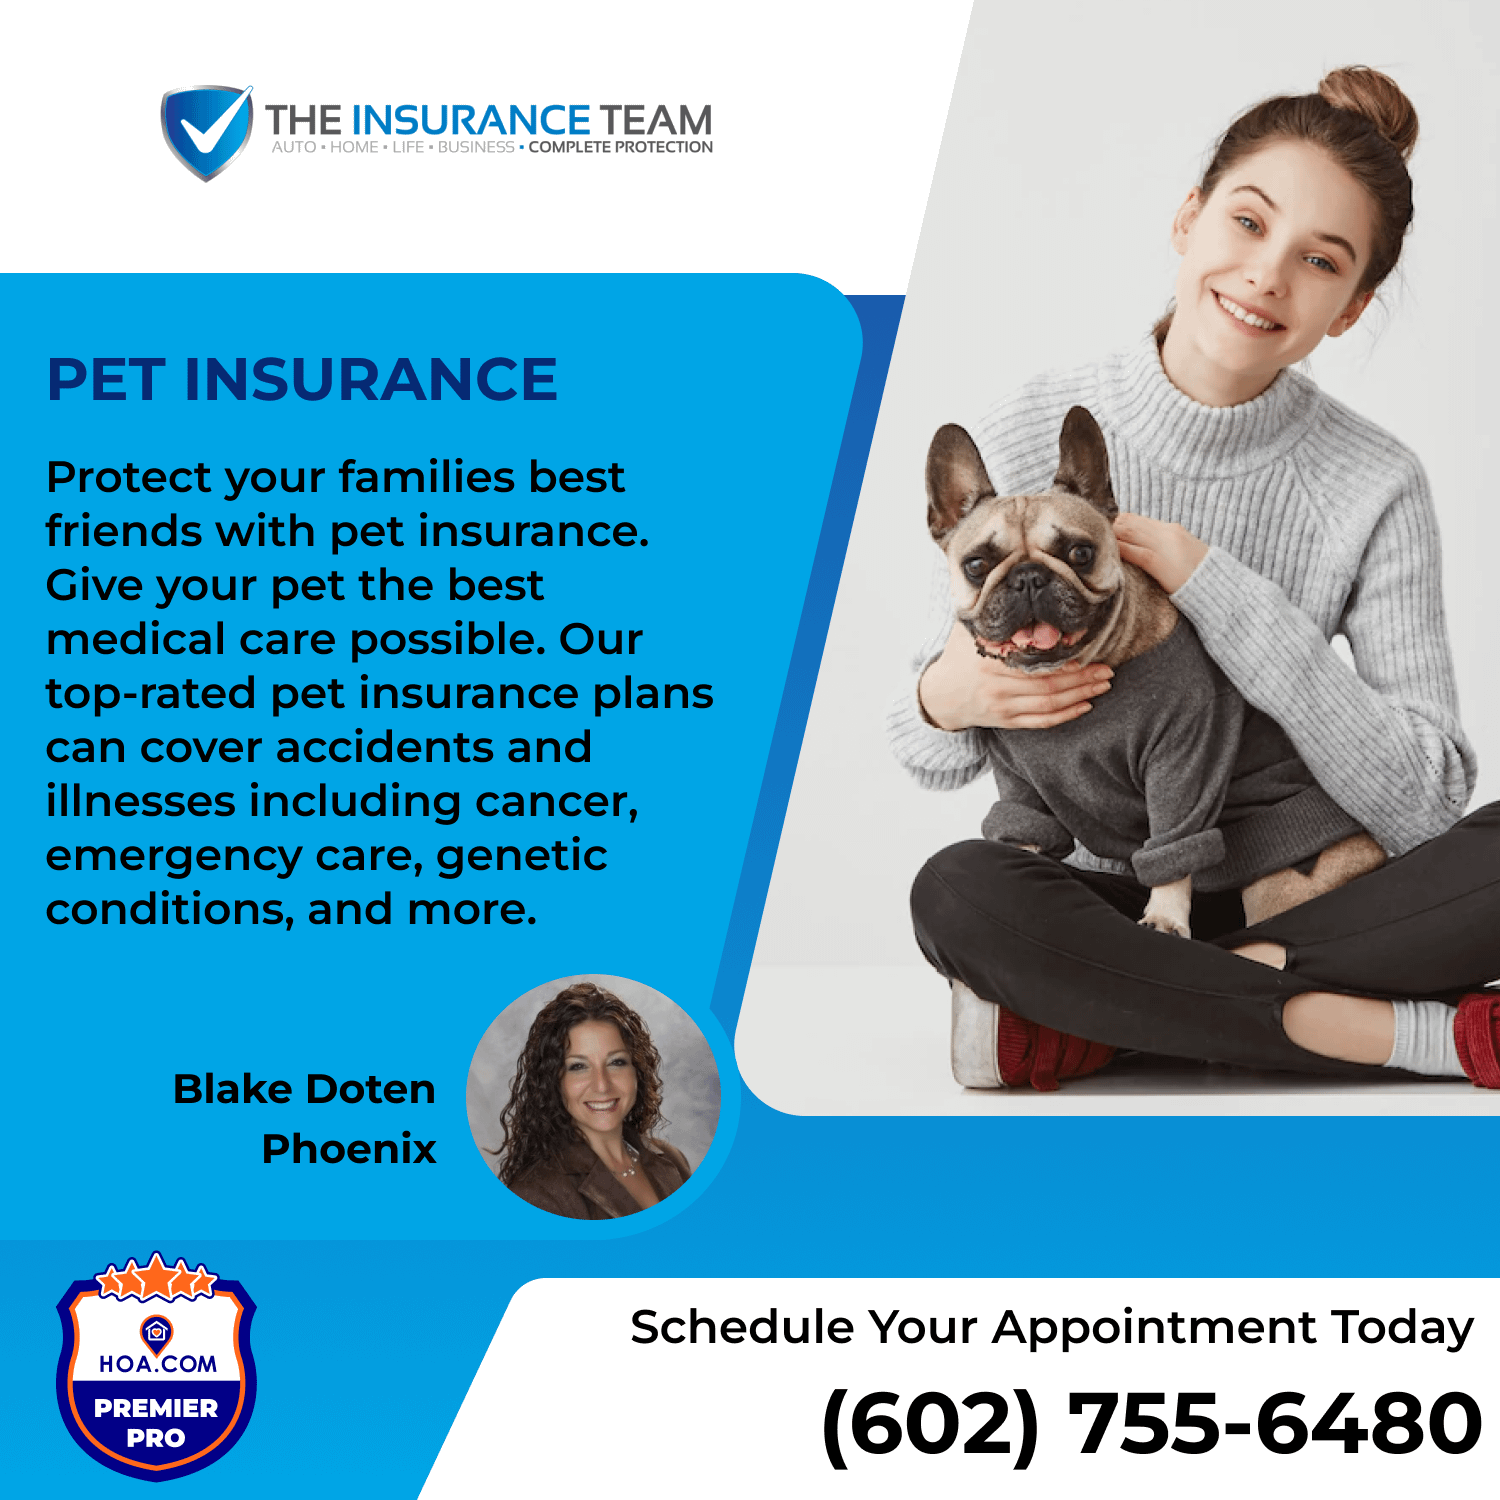 The Pet Insurance